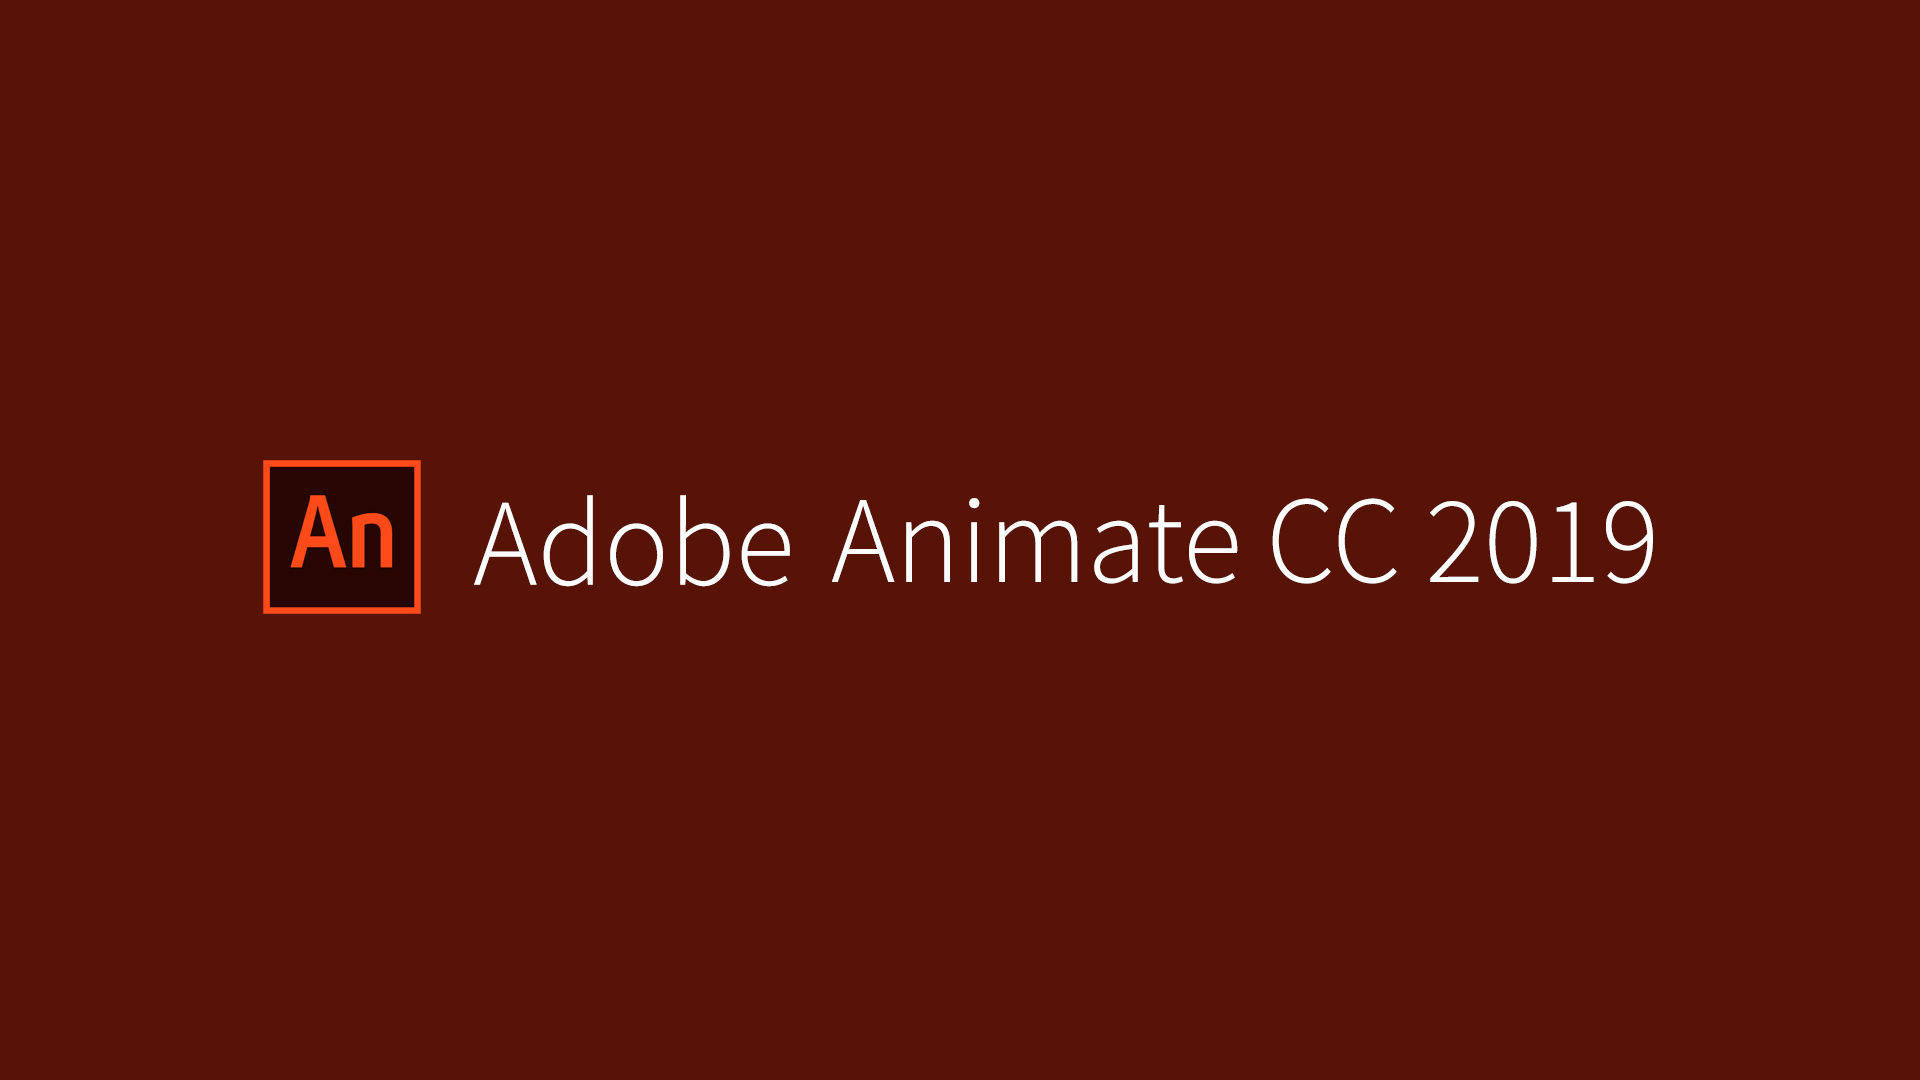 Adobe Animate CC 2019 download full crack - Link Google Drive FREE